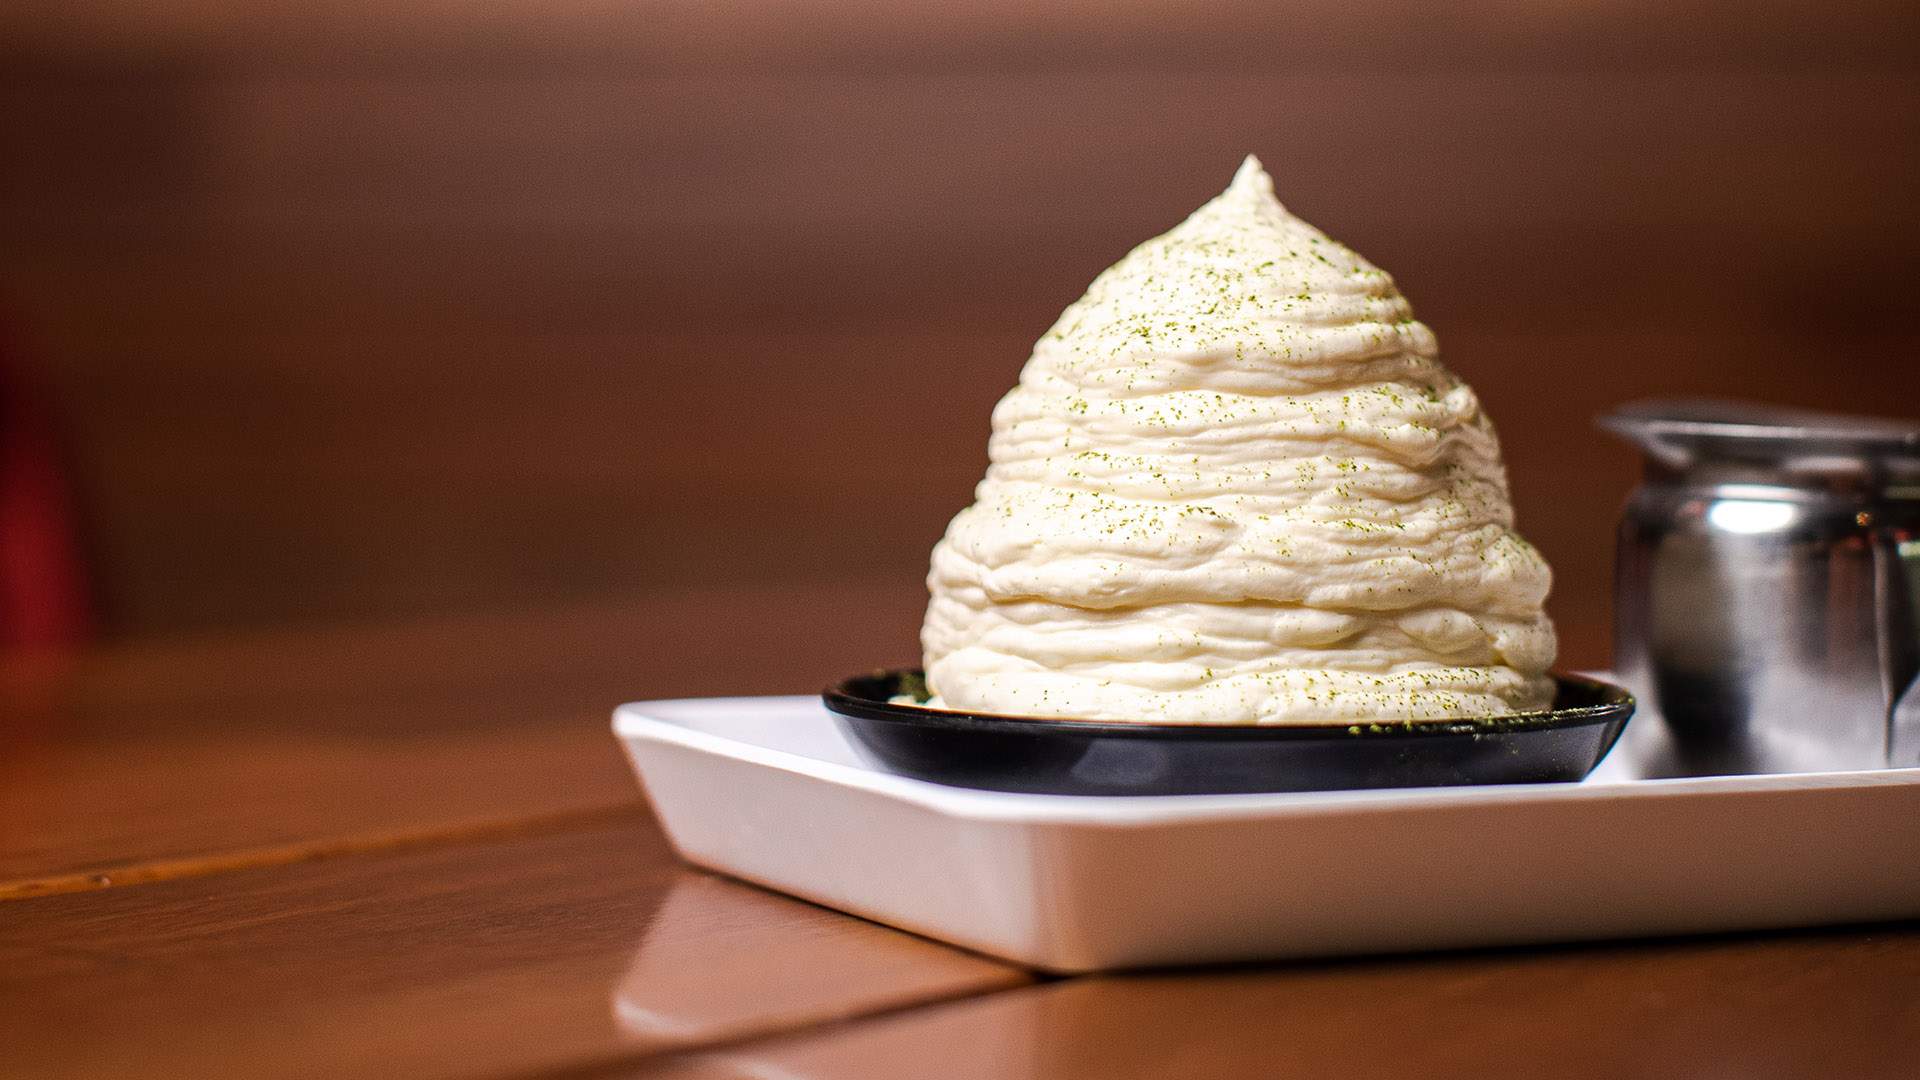 Harajuku Gyoza Has Just Added Super-Fluffy Japanese Air Cheesecakes to Its Dessert Menu